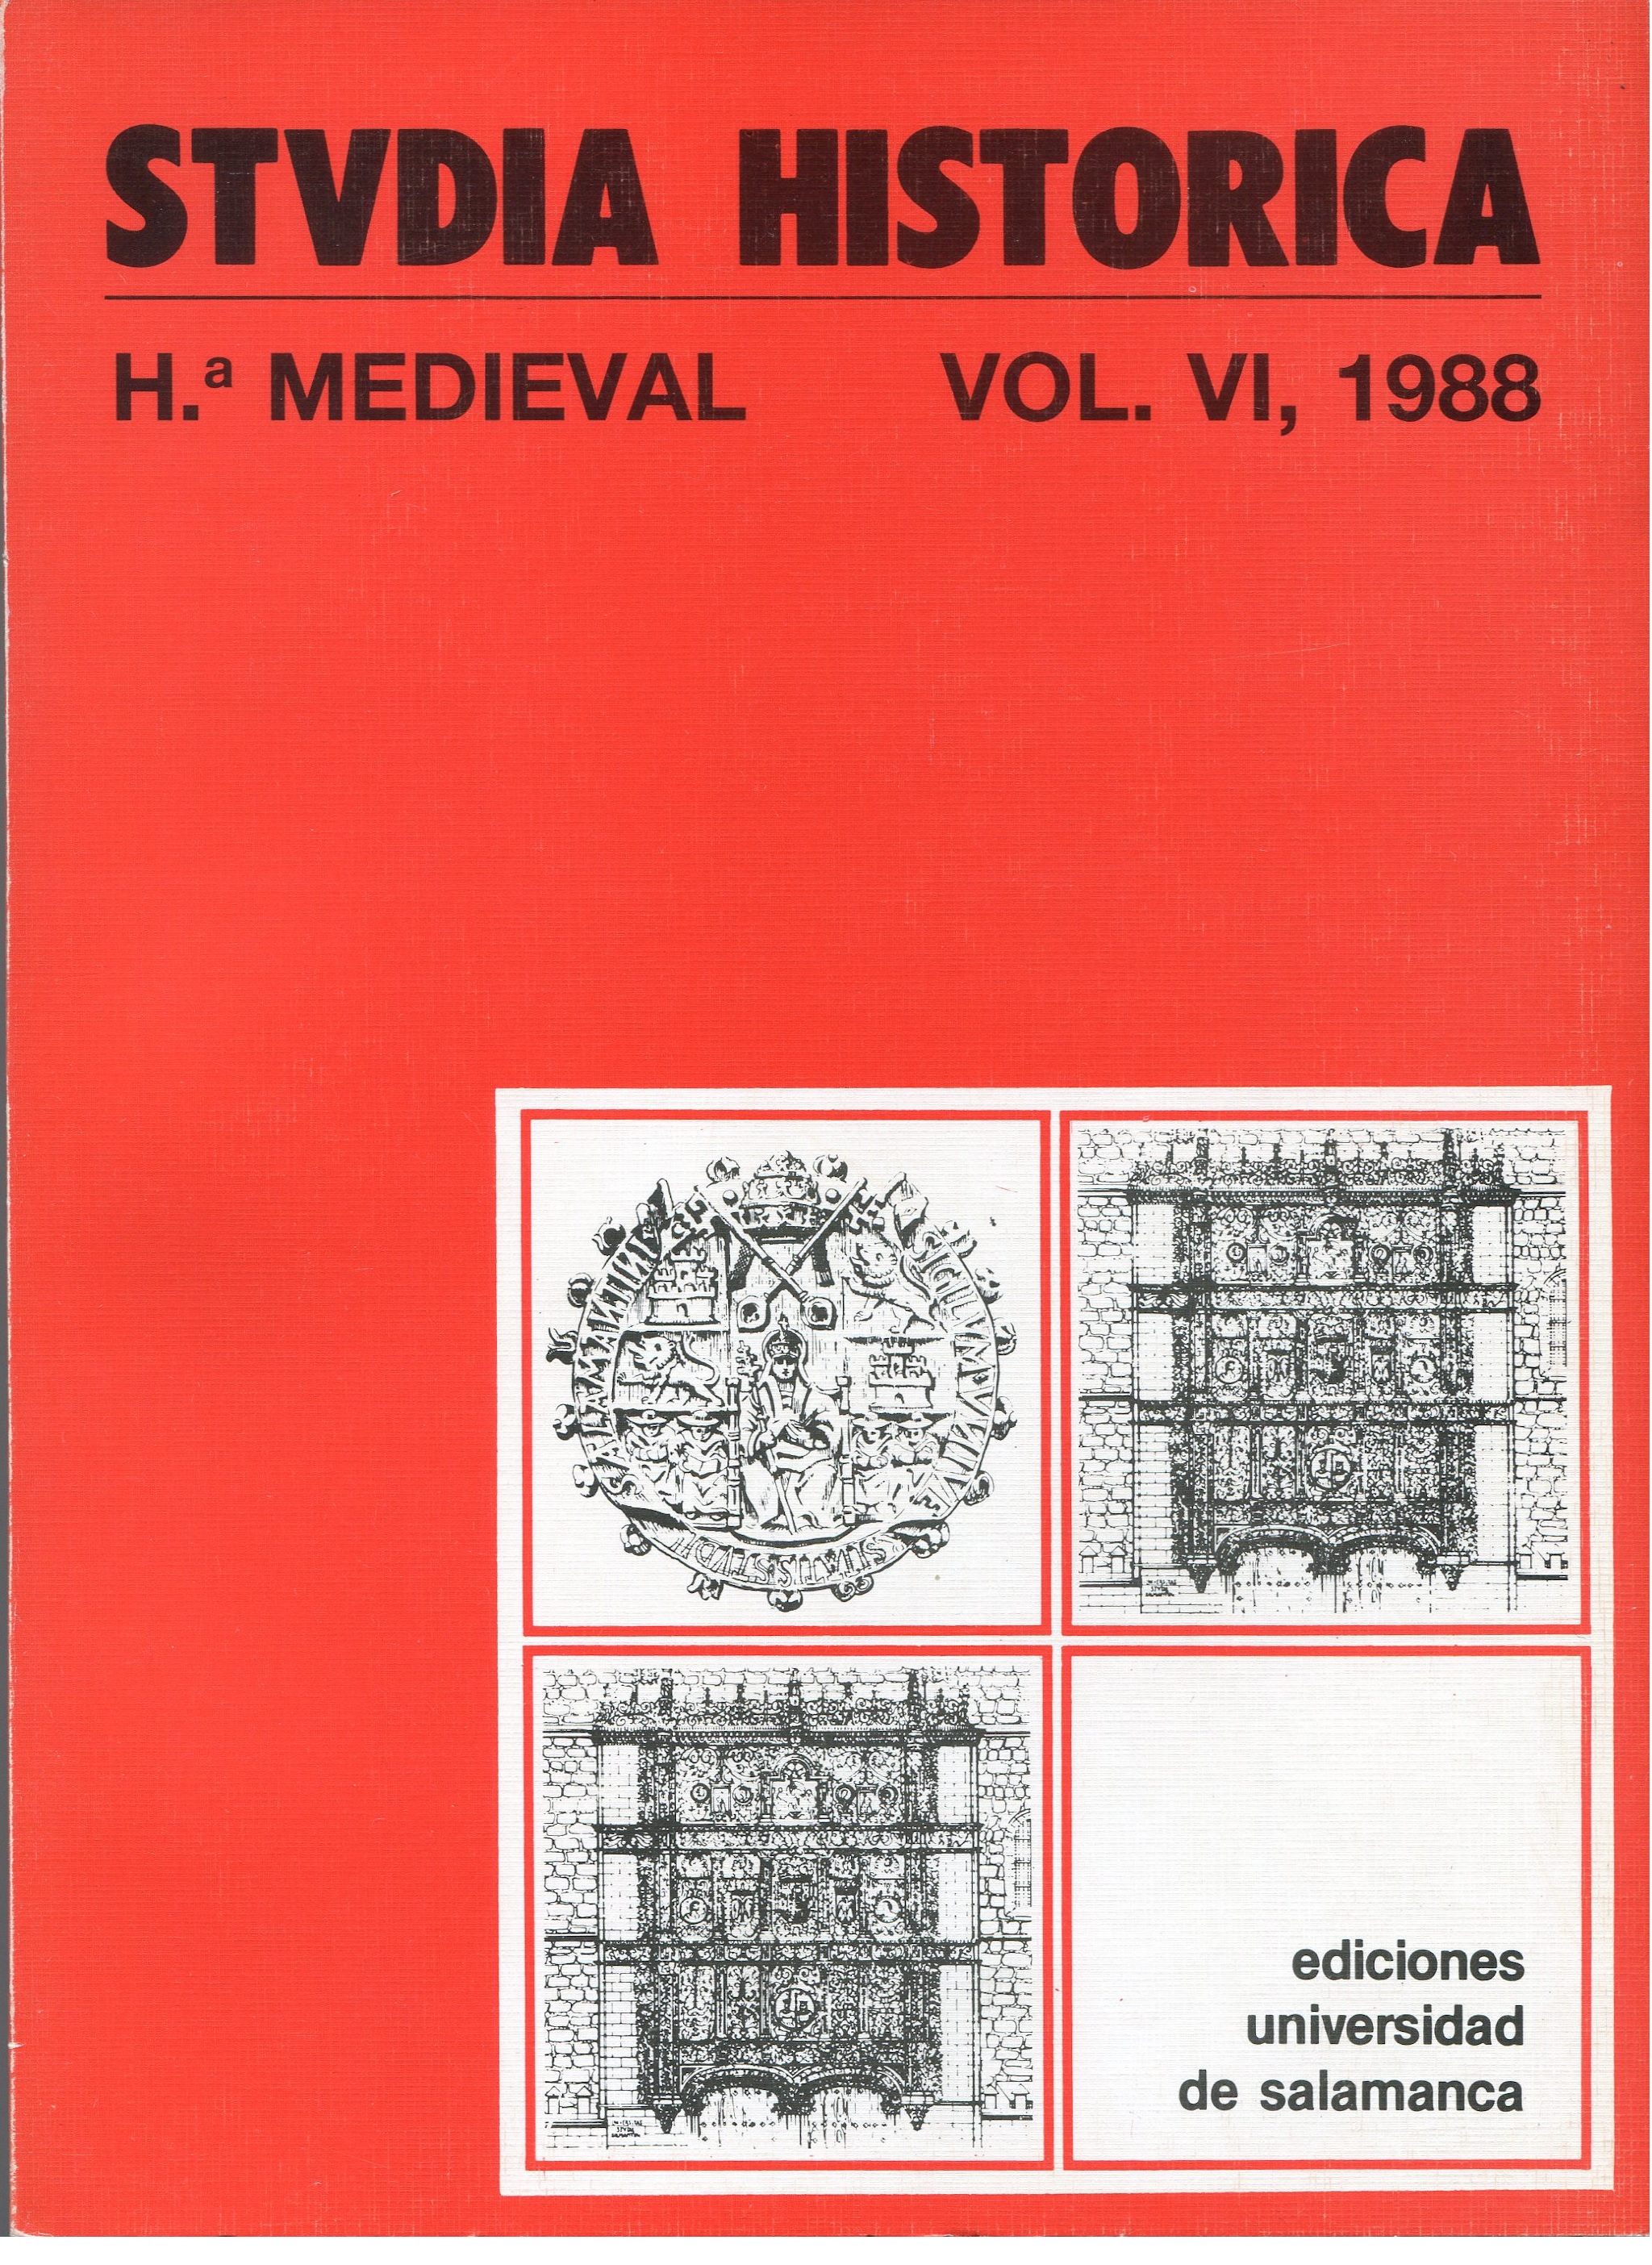                         Ver Vol. 6 (1988)
                    